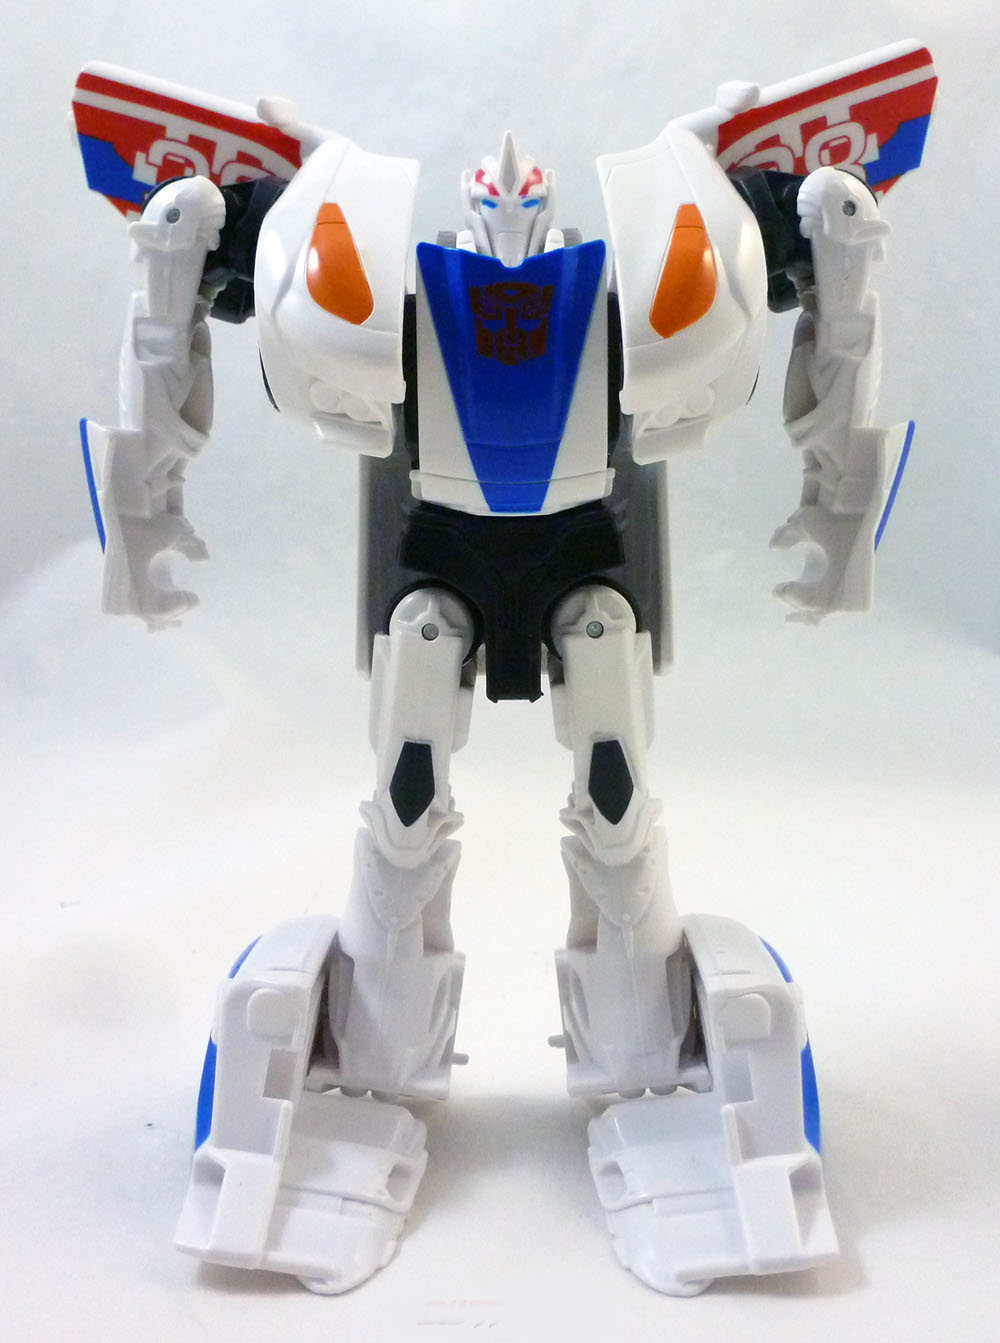 Đồ chơi Transformer - Robot biến hình Beast Hunters Smokescreen